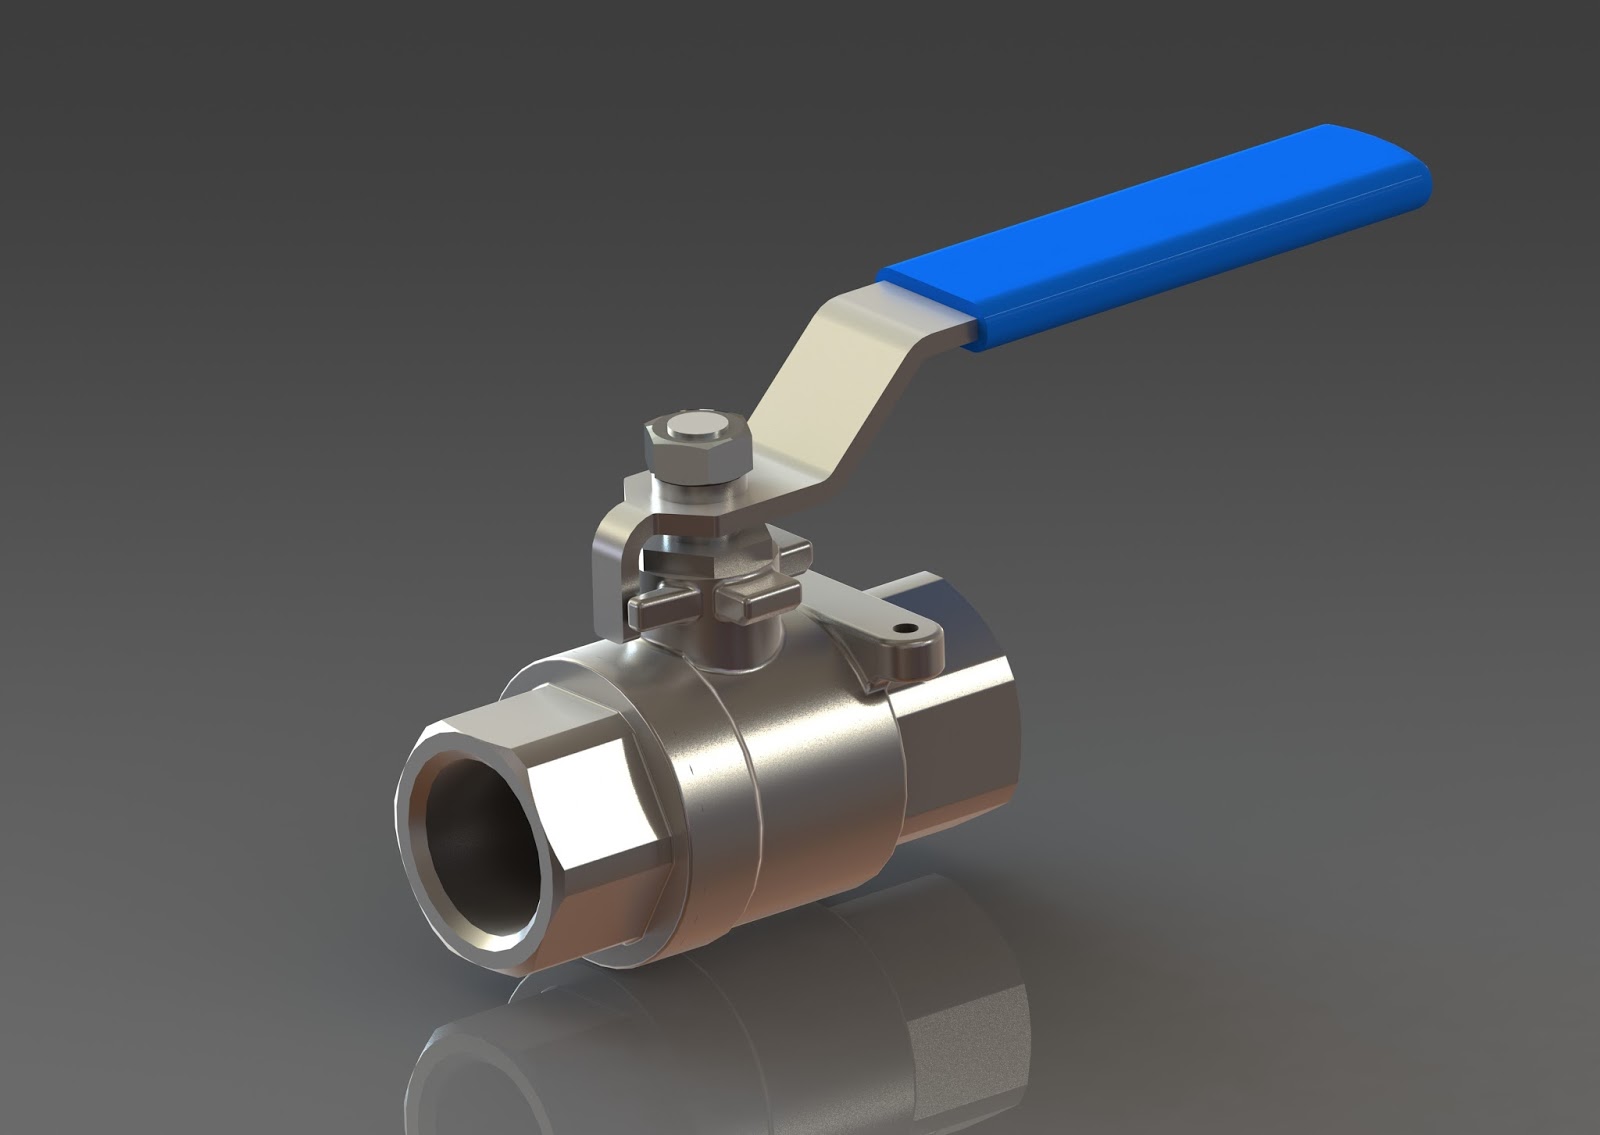 Ball valve 3/4 || Download free 3D cad models #5053